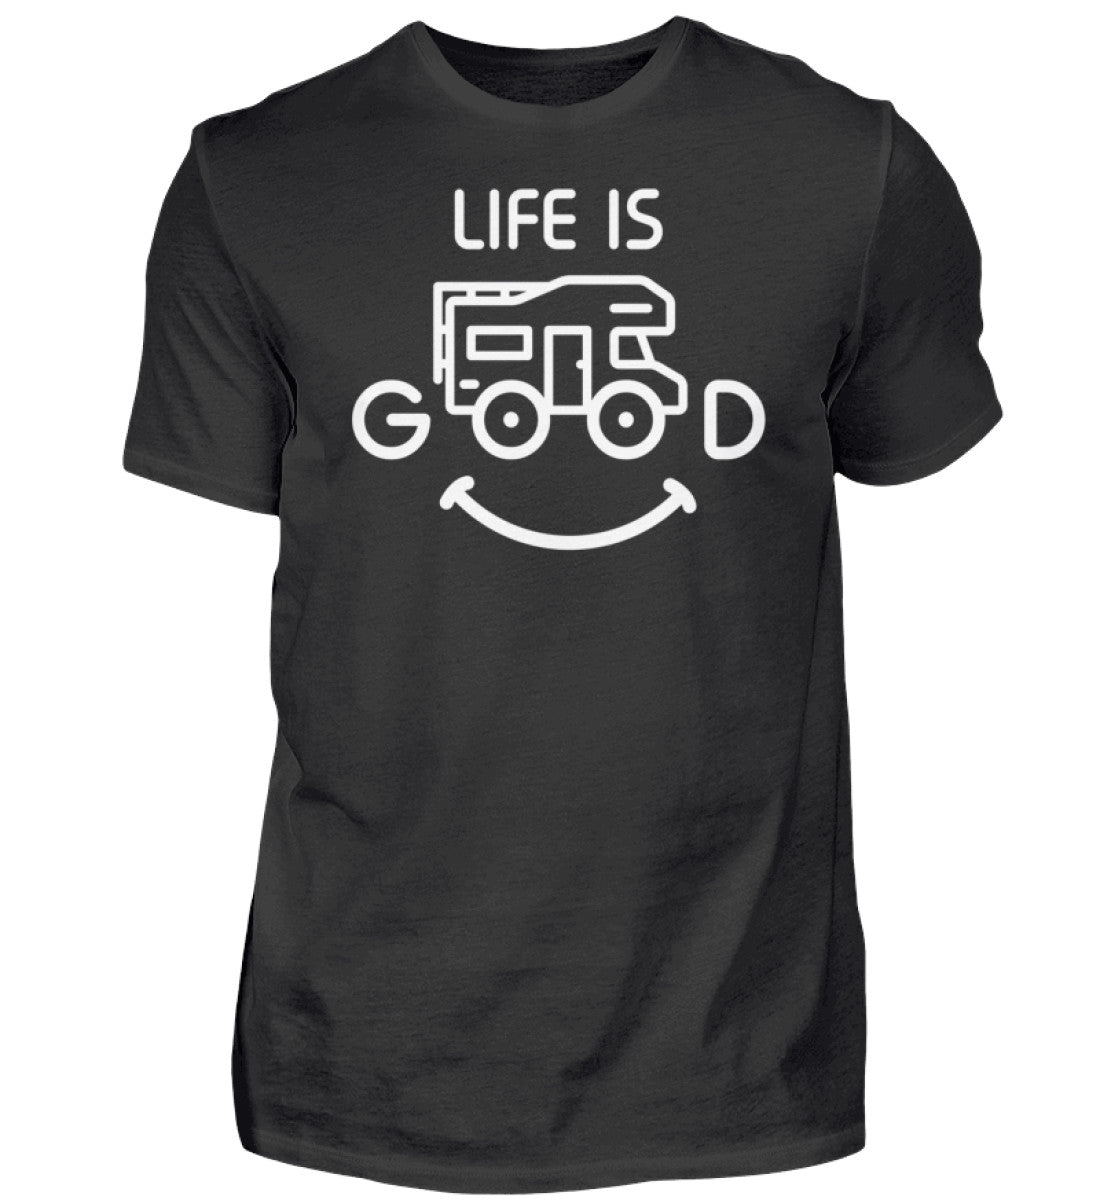 LIFE IS GOOD - Herren Shirt in der Farbe Black